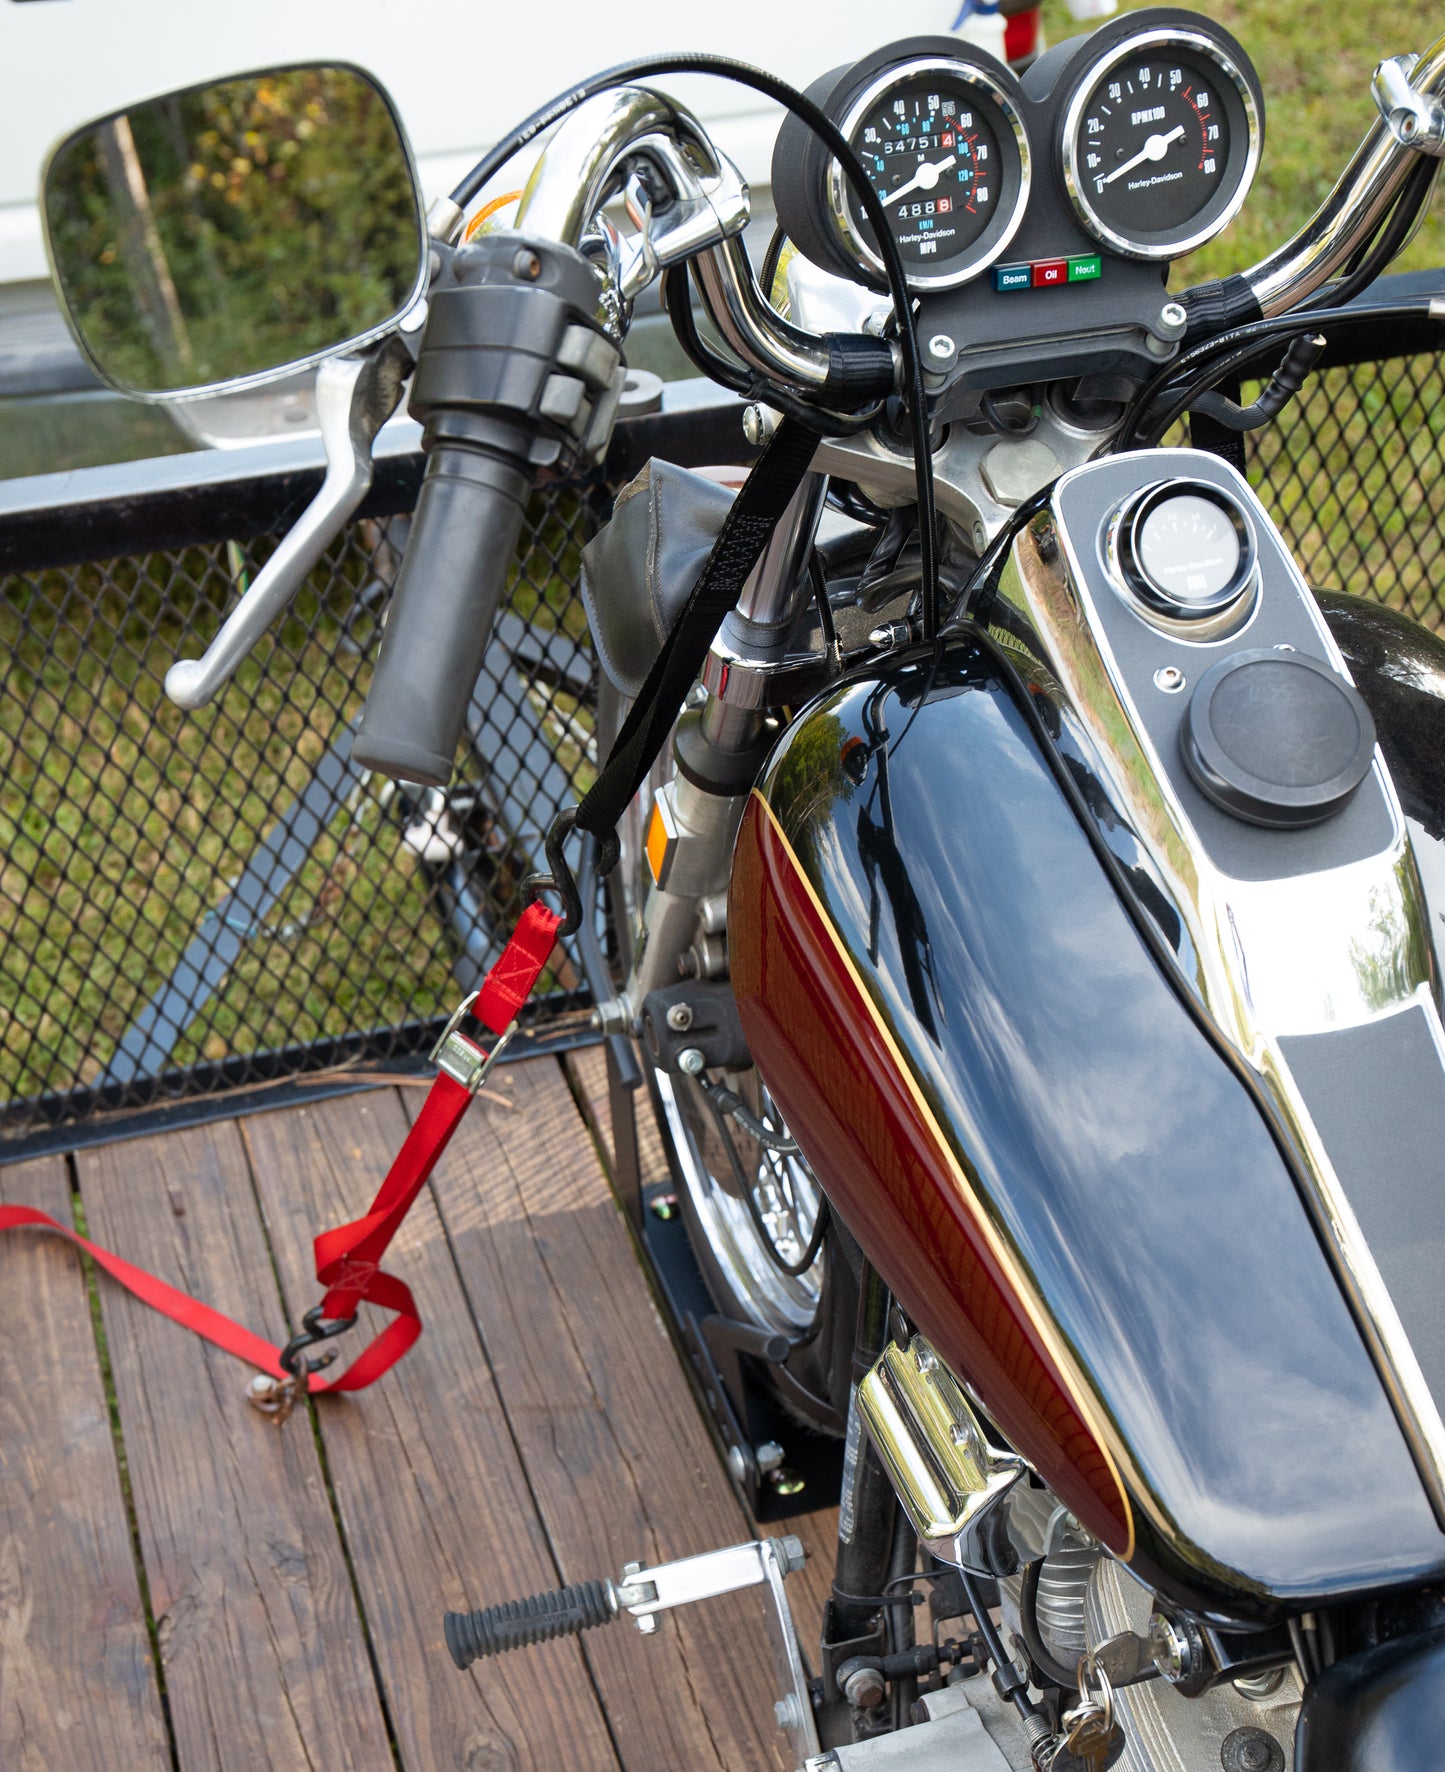 Black Boar Motorcycle Wheel Chock with Handlebar Straps